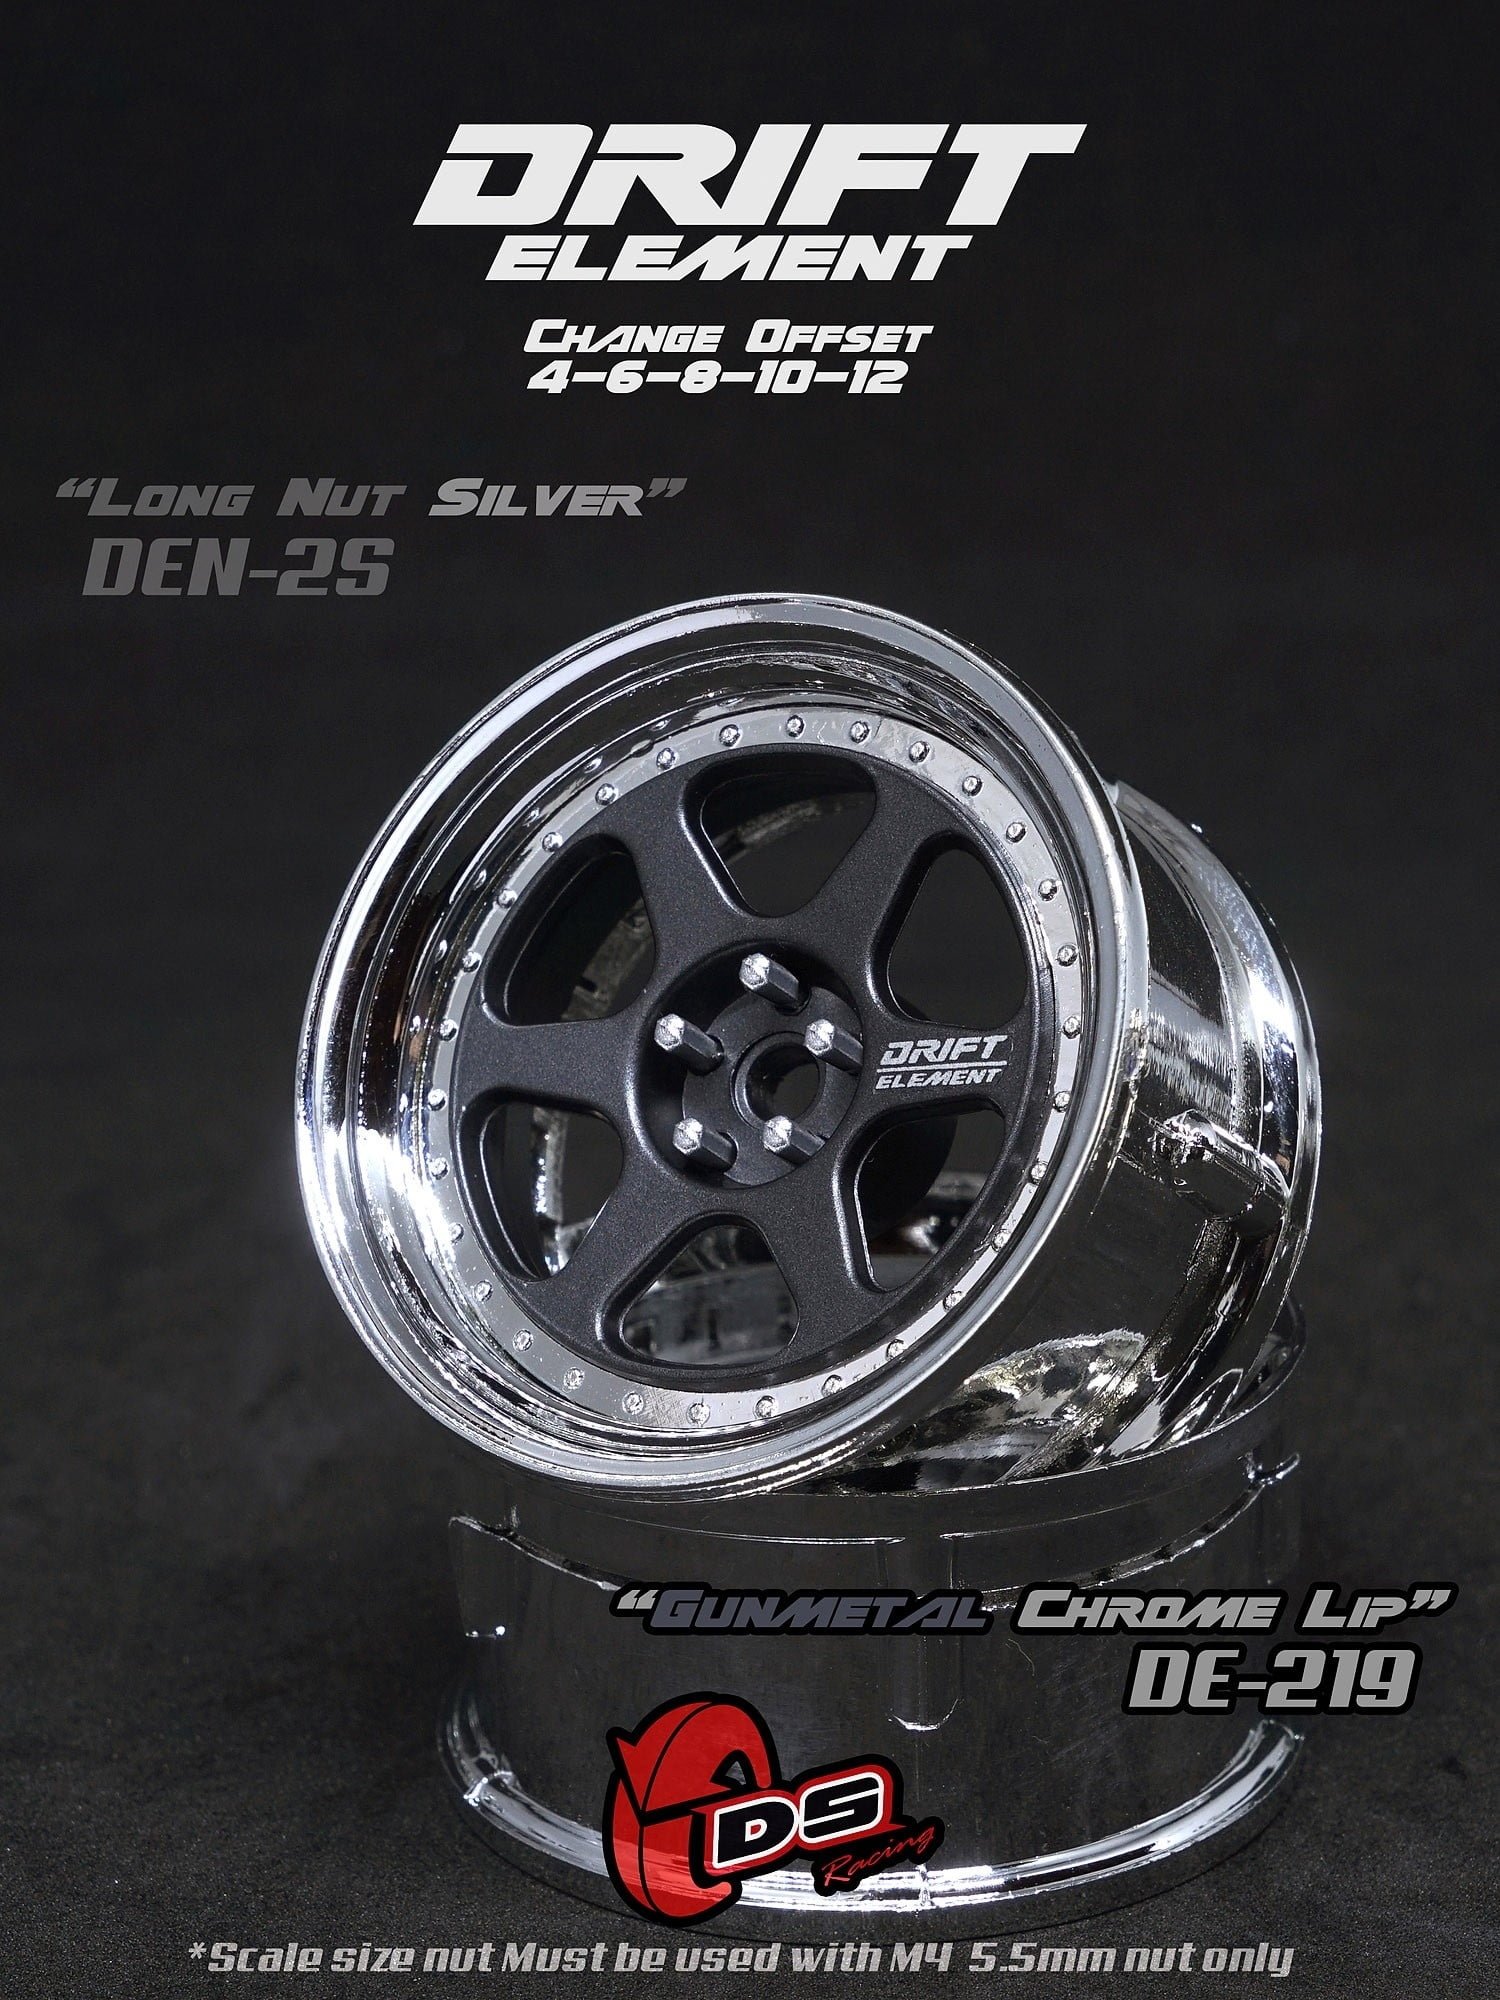 DS Racing Drift Element II 6 Spoke Rim 2 pcs Gunmetal Chrome Lip – DE-219